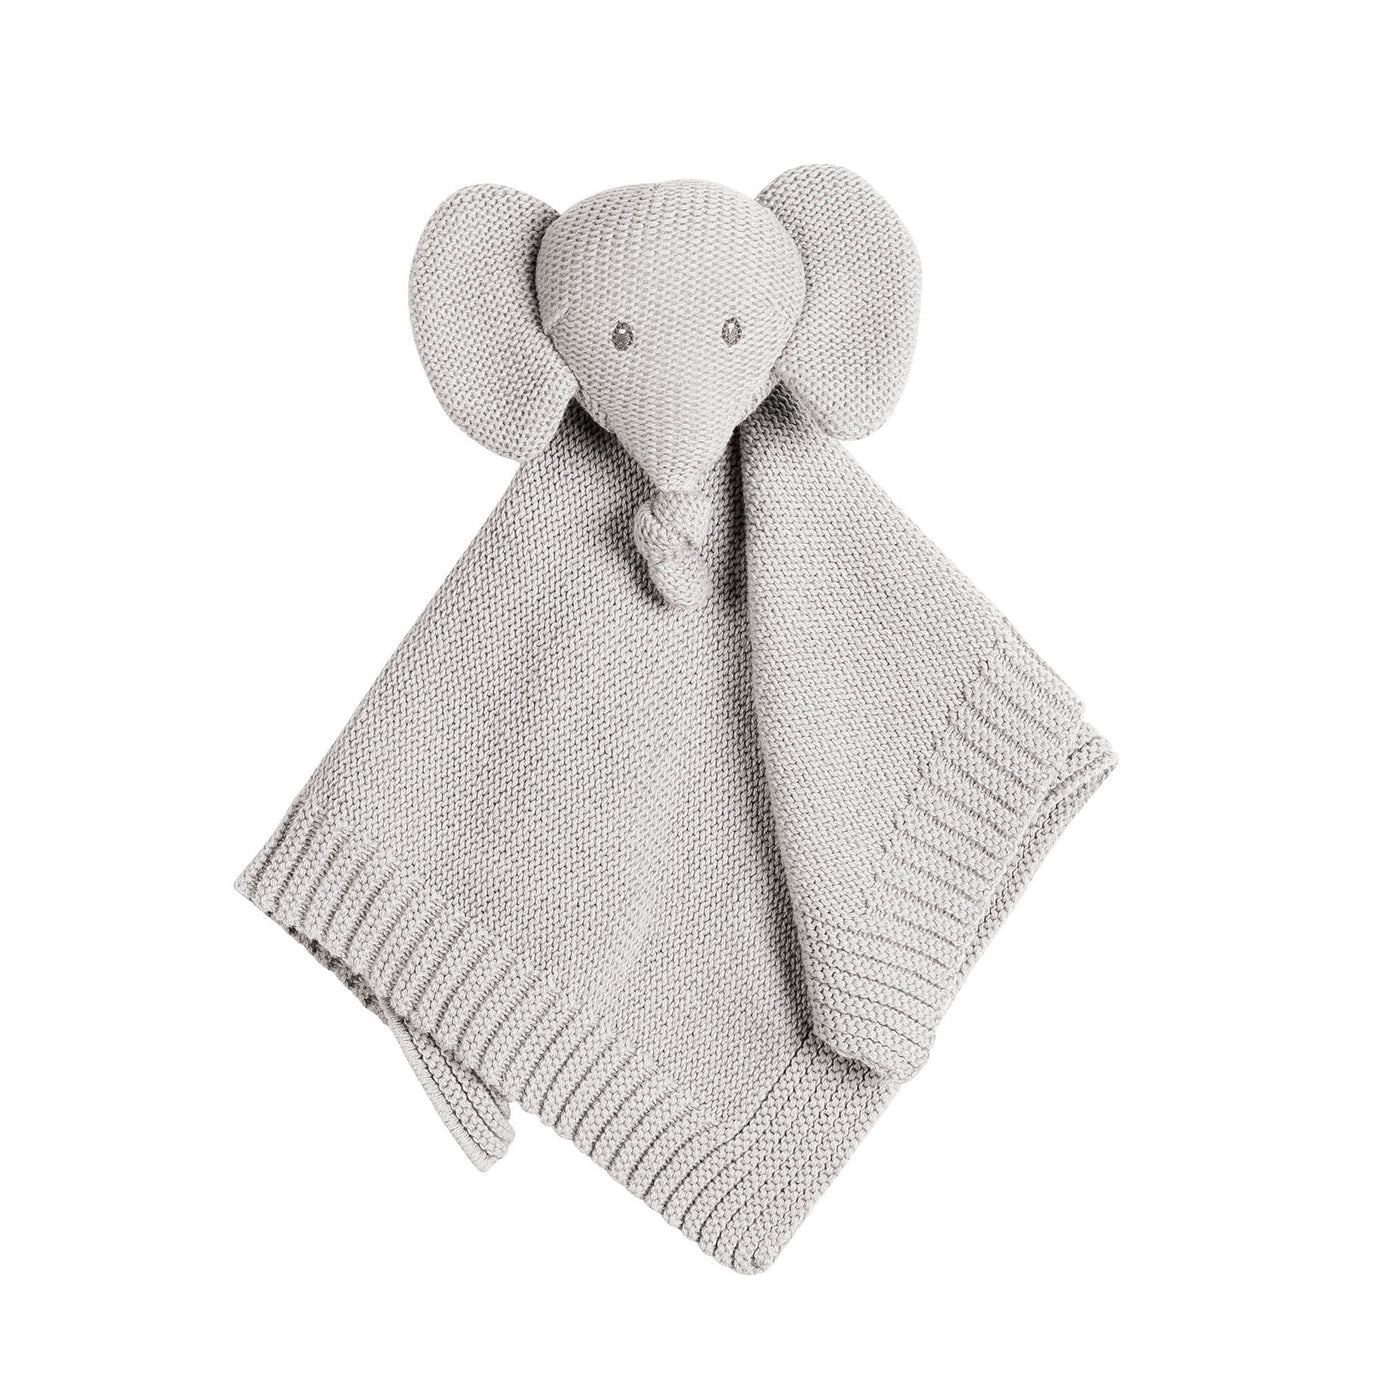 Nattou Tembo Knitted Elephant Comforter